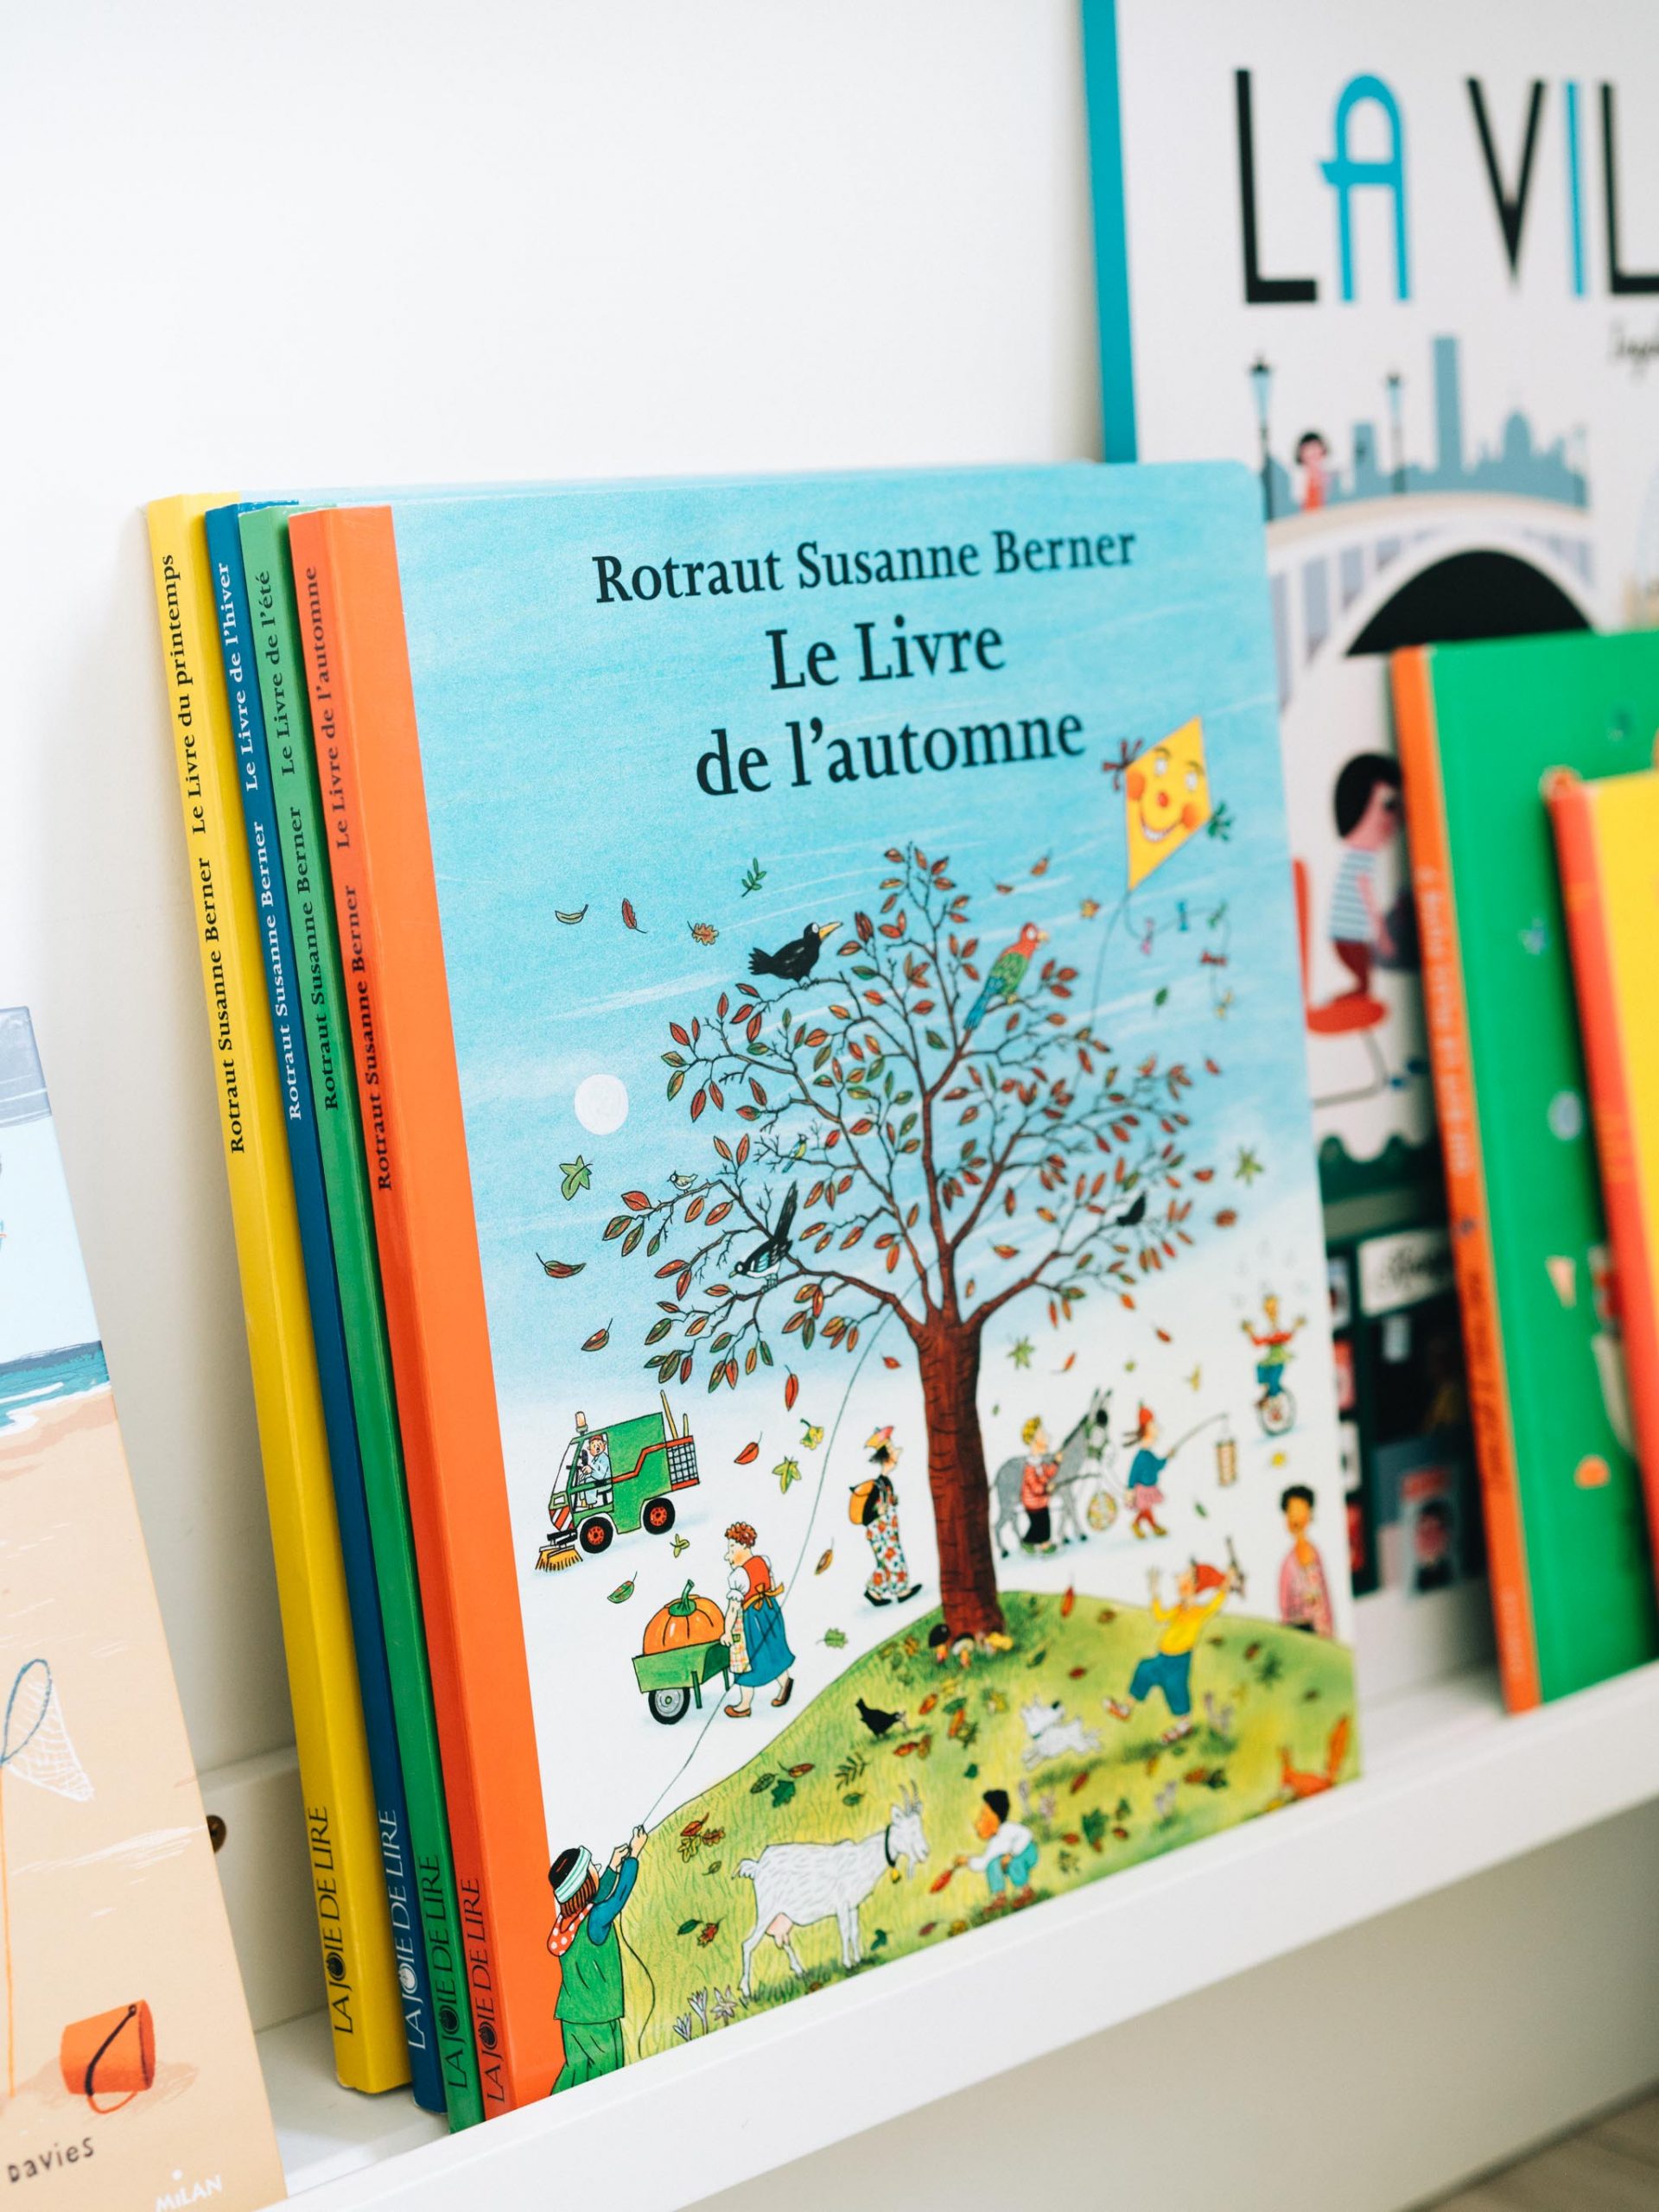 Quels livres offrir à un enfant de 2 ans ? - Parisianavores - Blog